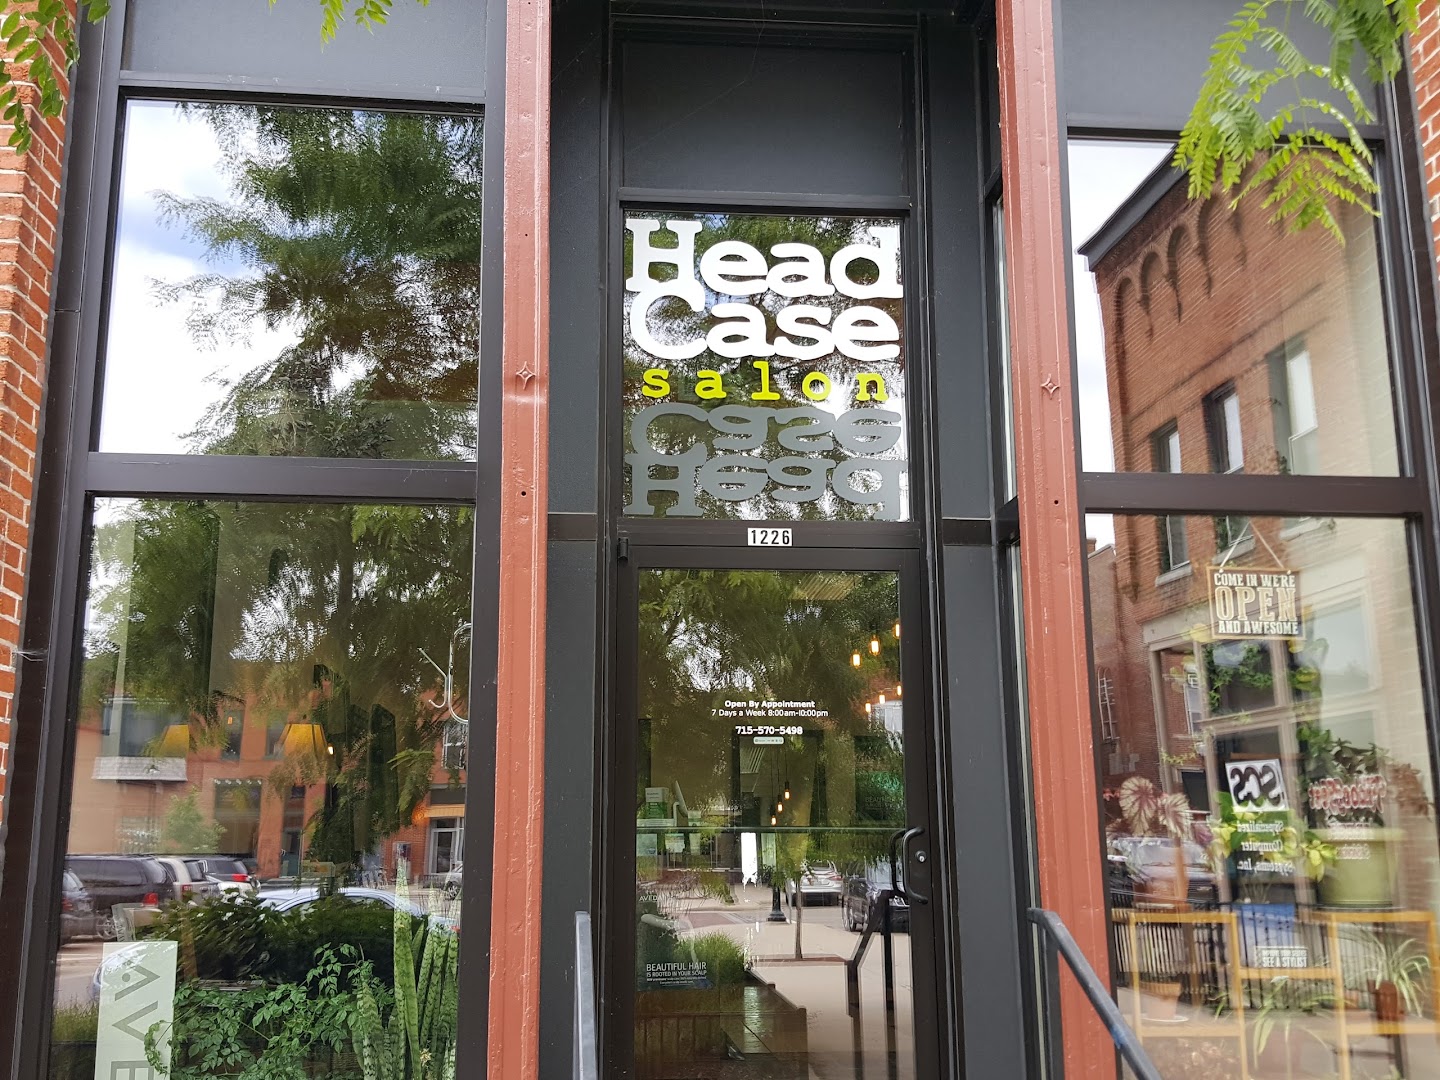 Head Case Salon